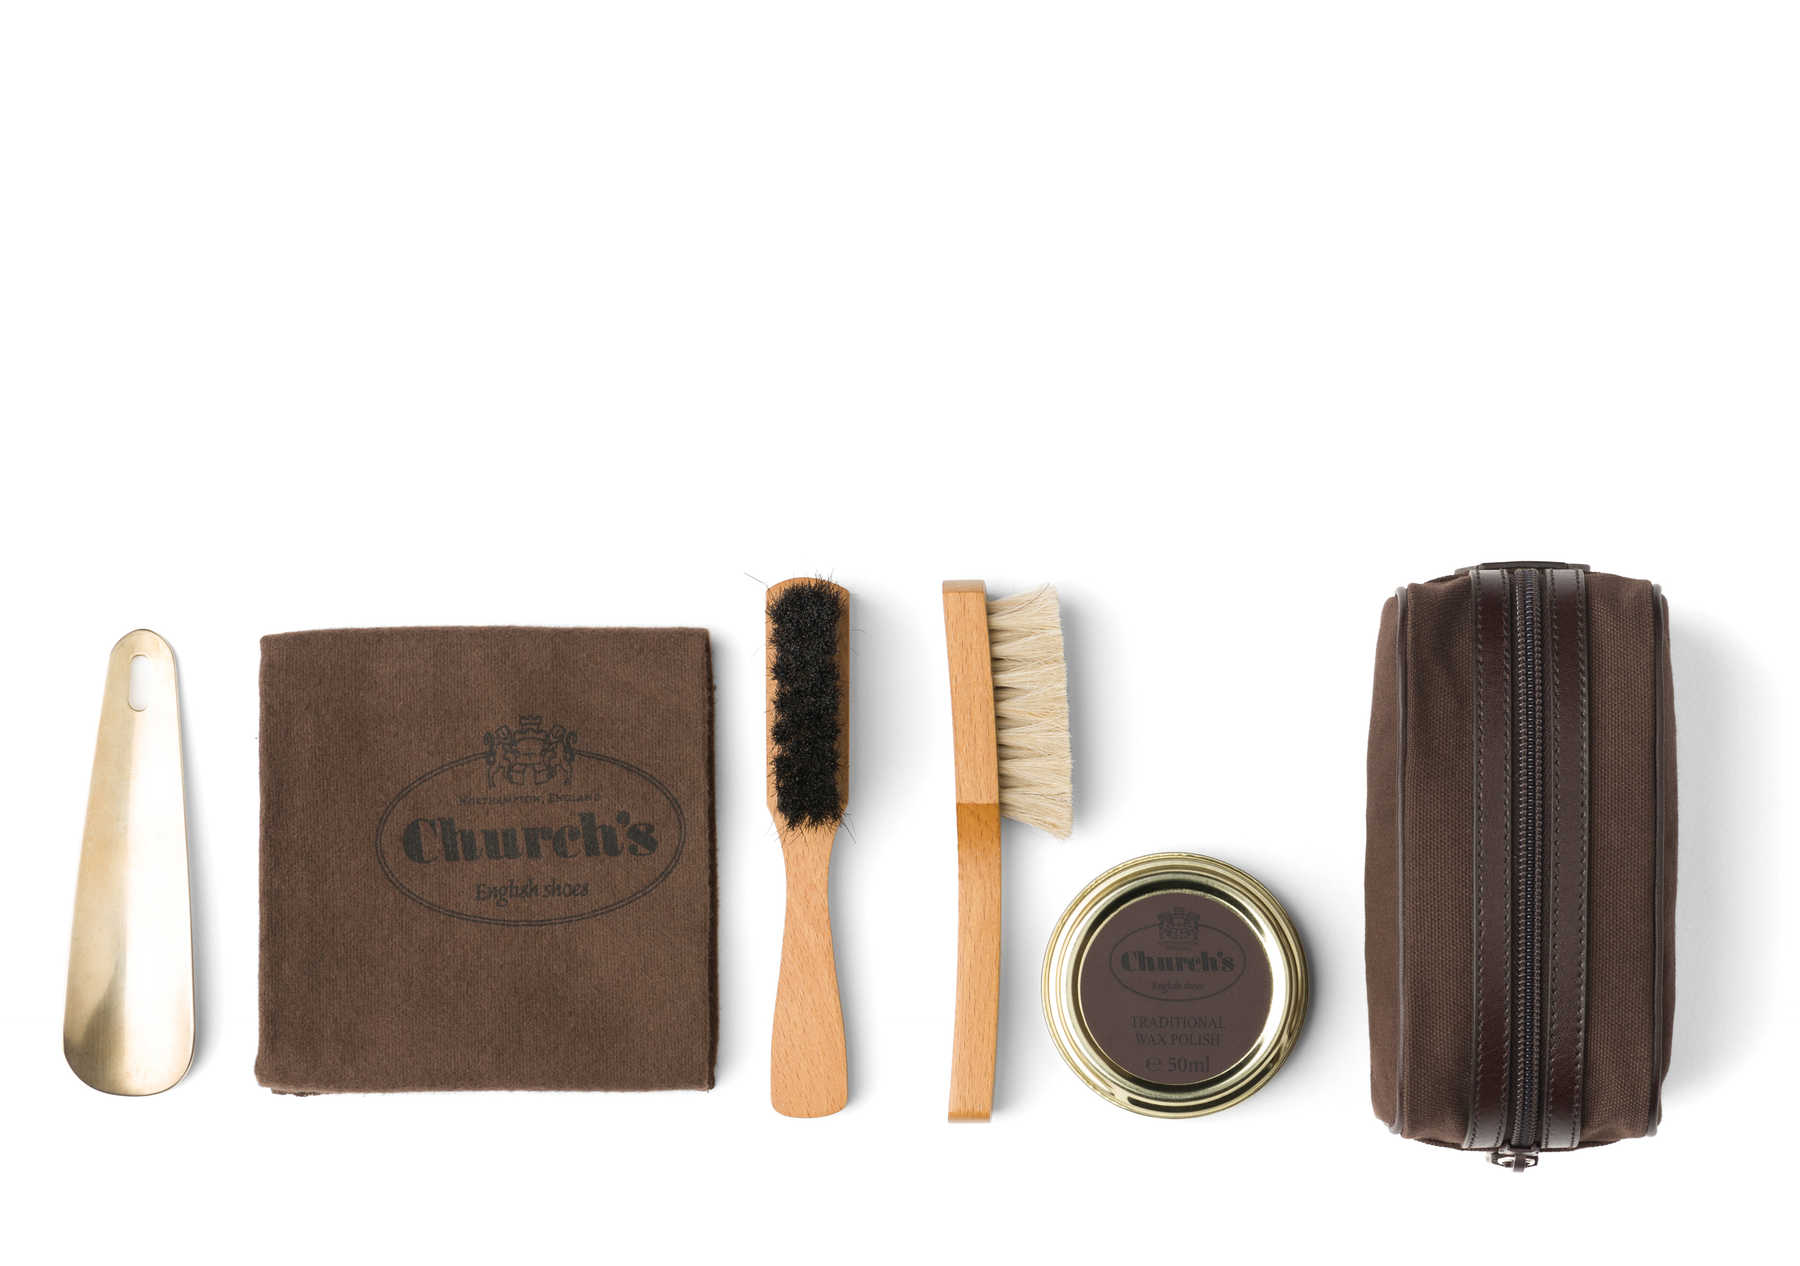 Church's Travel shoe care kit - All 